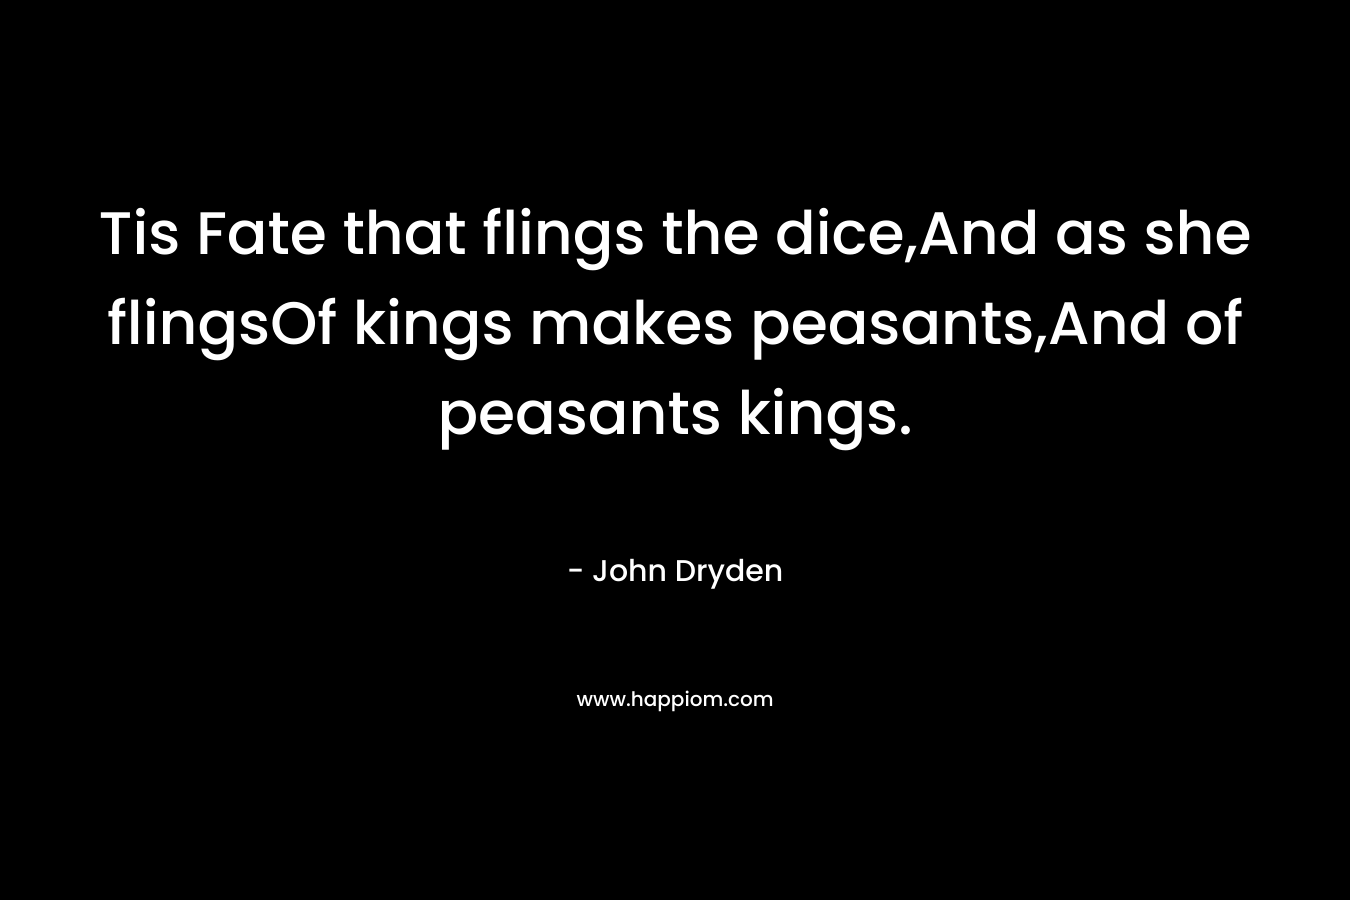 Tis Fate that flings the dice,And as she flingsOf kings makes peasants,And of peasants kings.